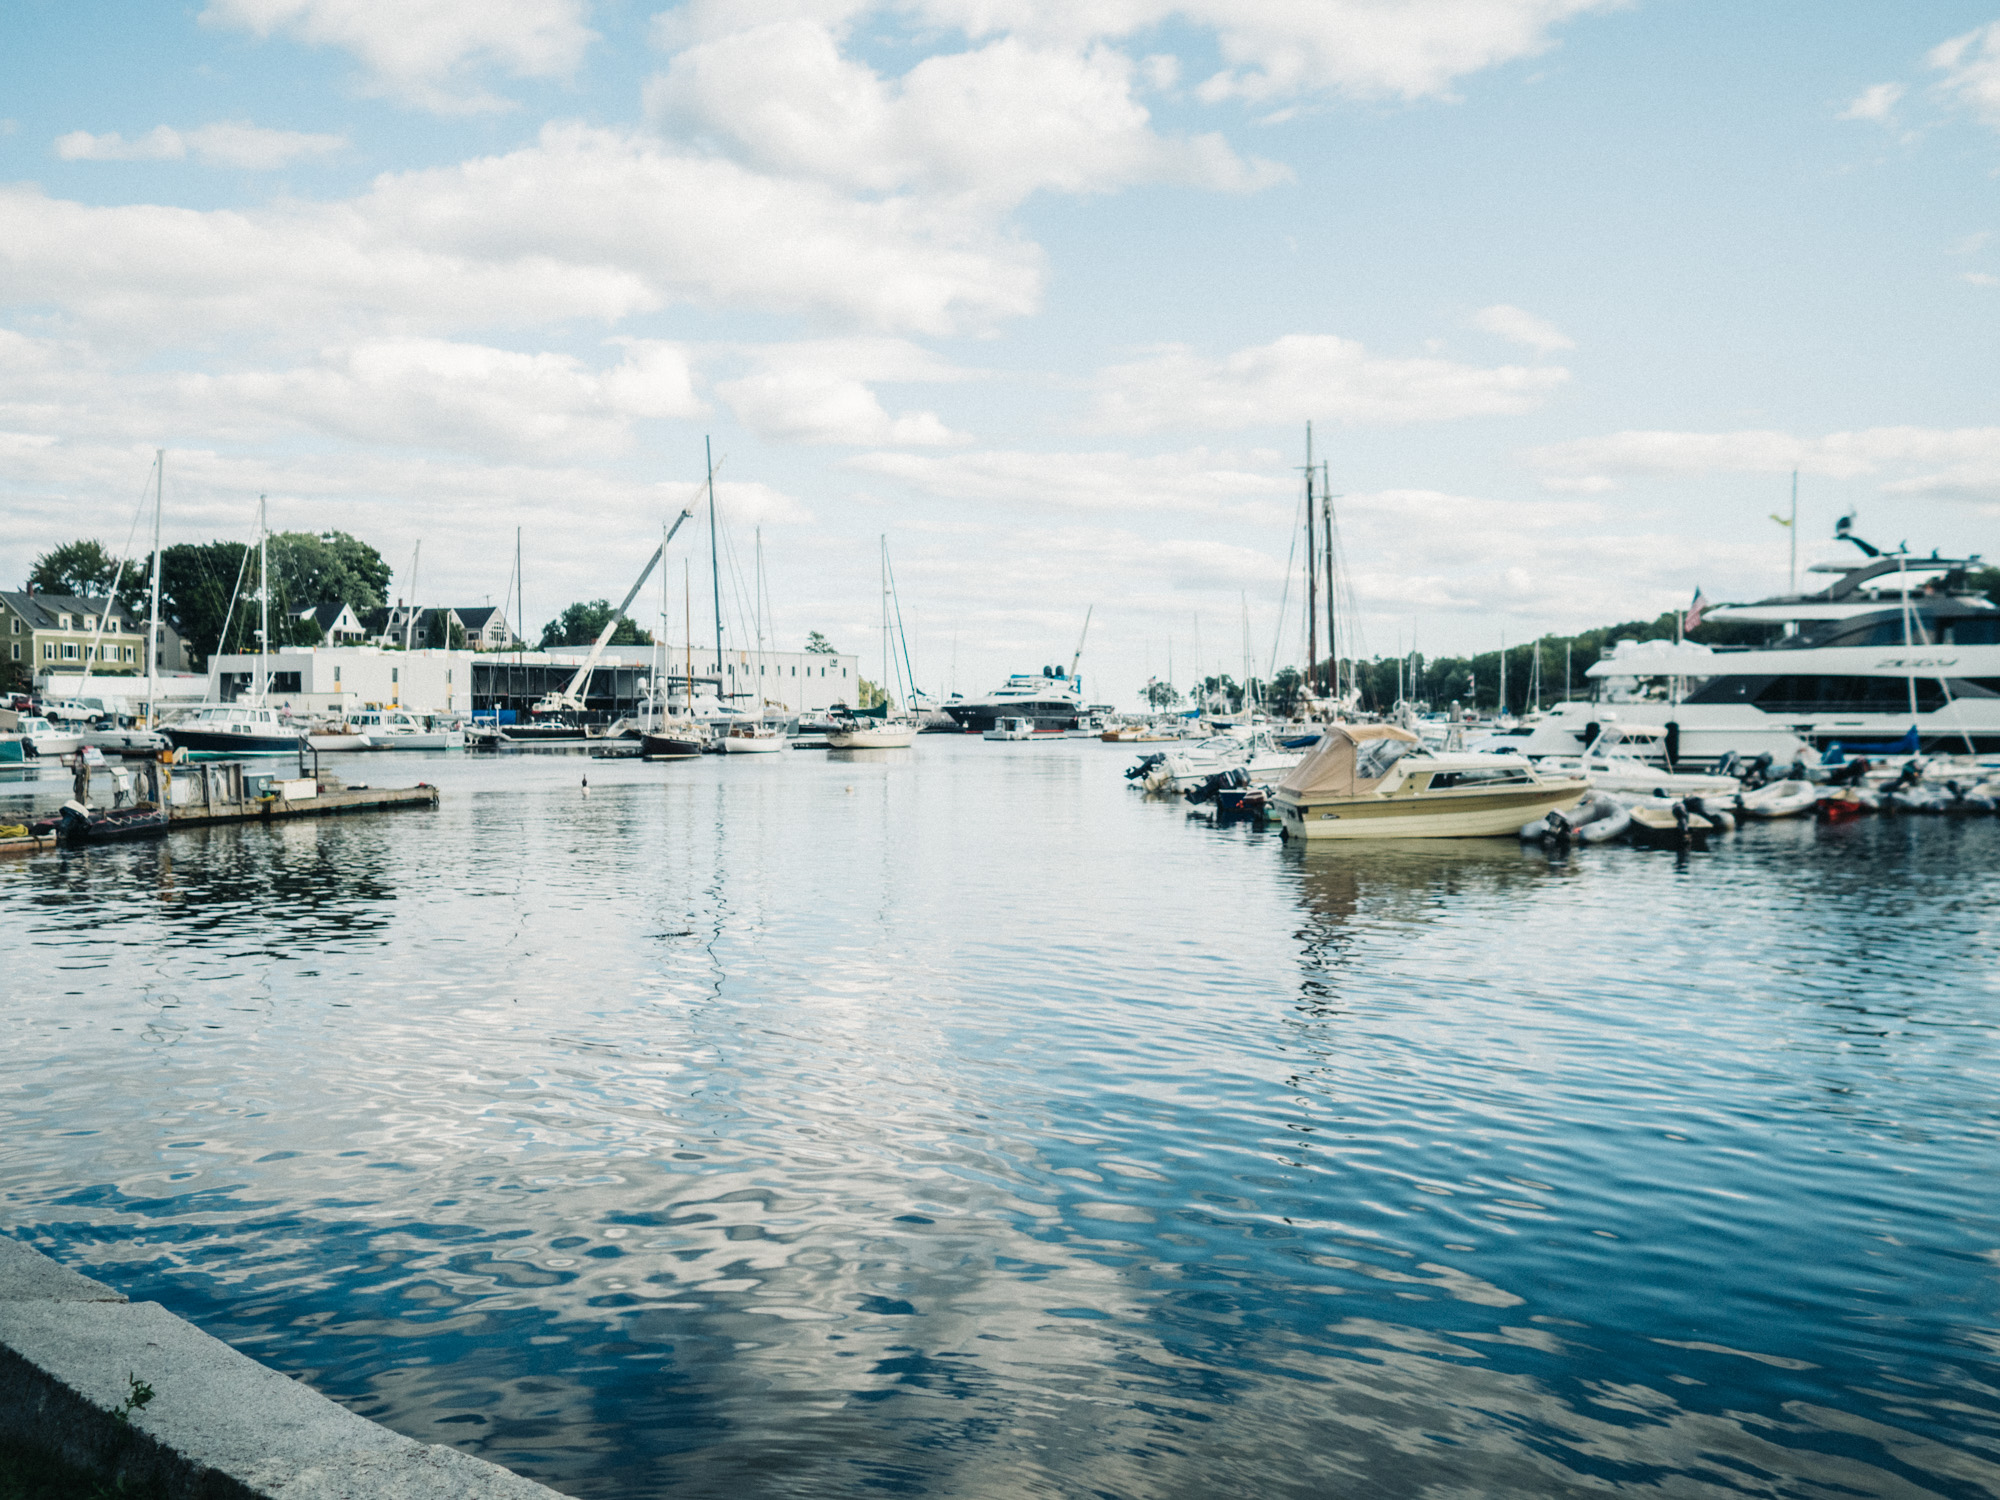 Harbor reflections | Camden, Maine | Photography by Carla Gabriel Garcia